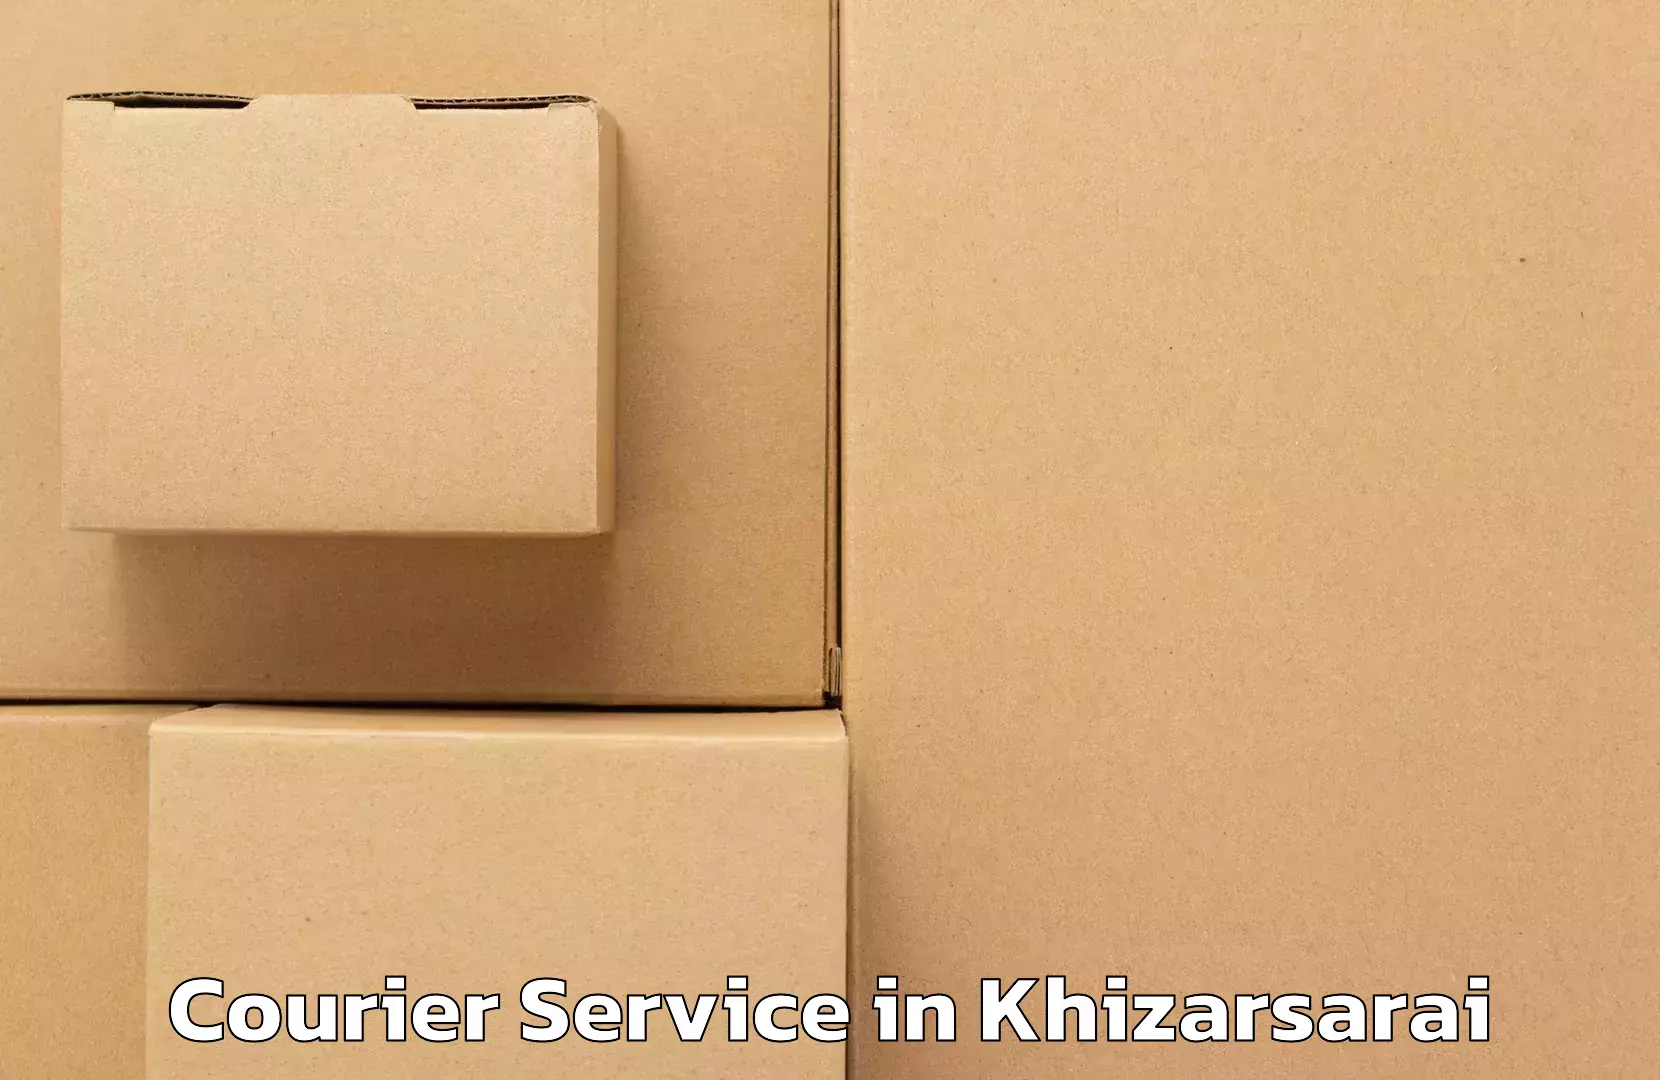 Modern delivery technologies in Khizarsarai